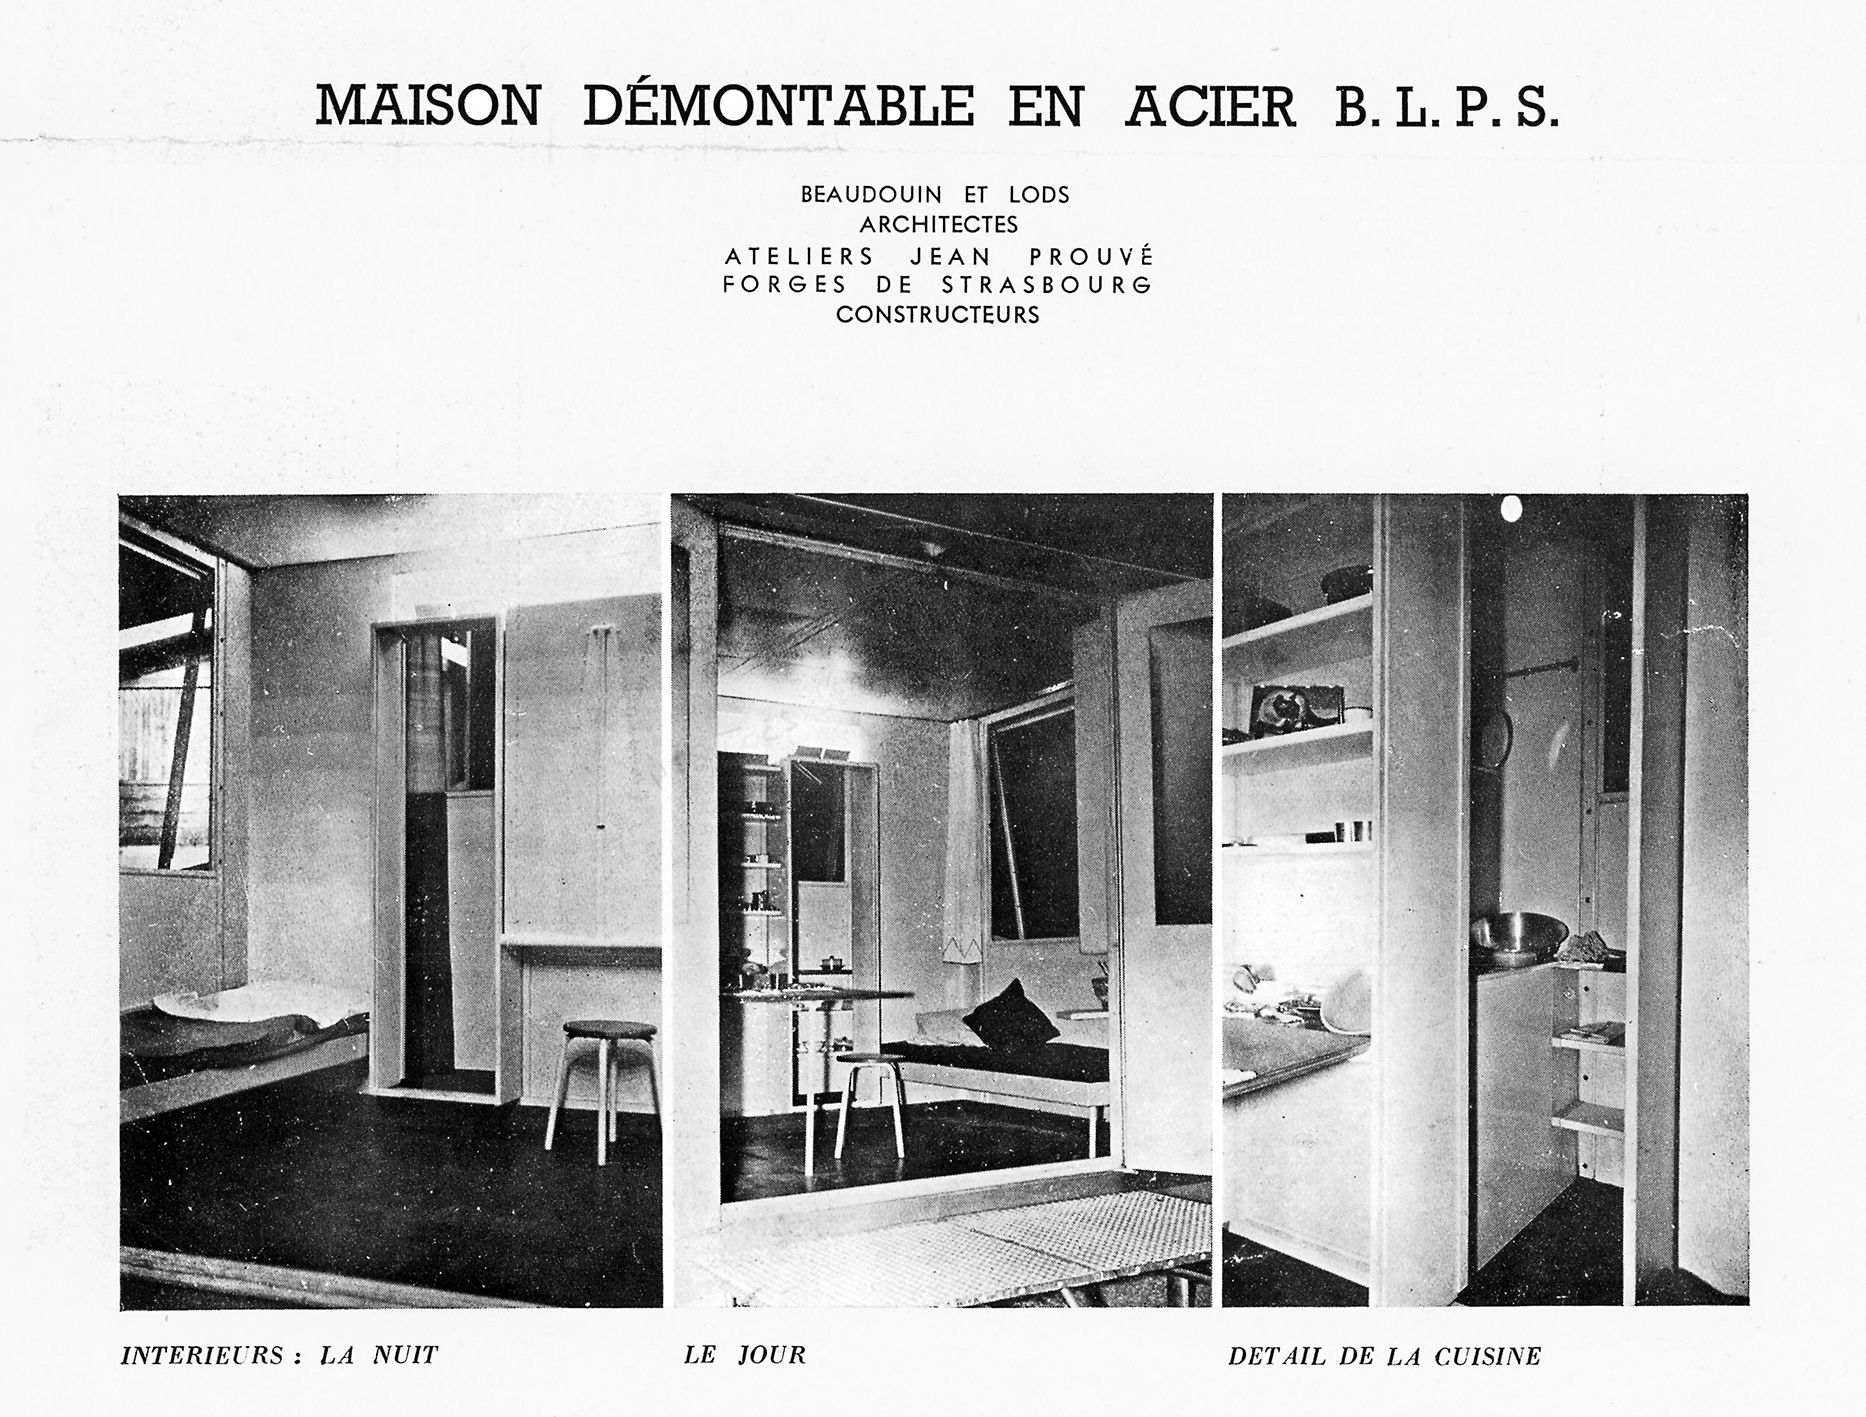 Demountable week-end house BLPS (architects E. Beaudouin and M. Lods, designer Ateliers Jean Prouvé, constructor Les Forges de Strasbourg, 1937). Interior of the prototype.